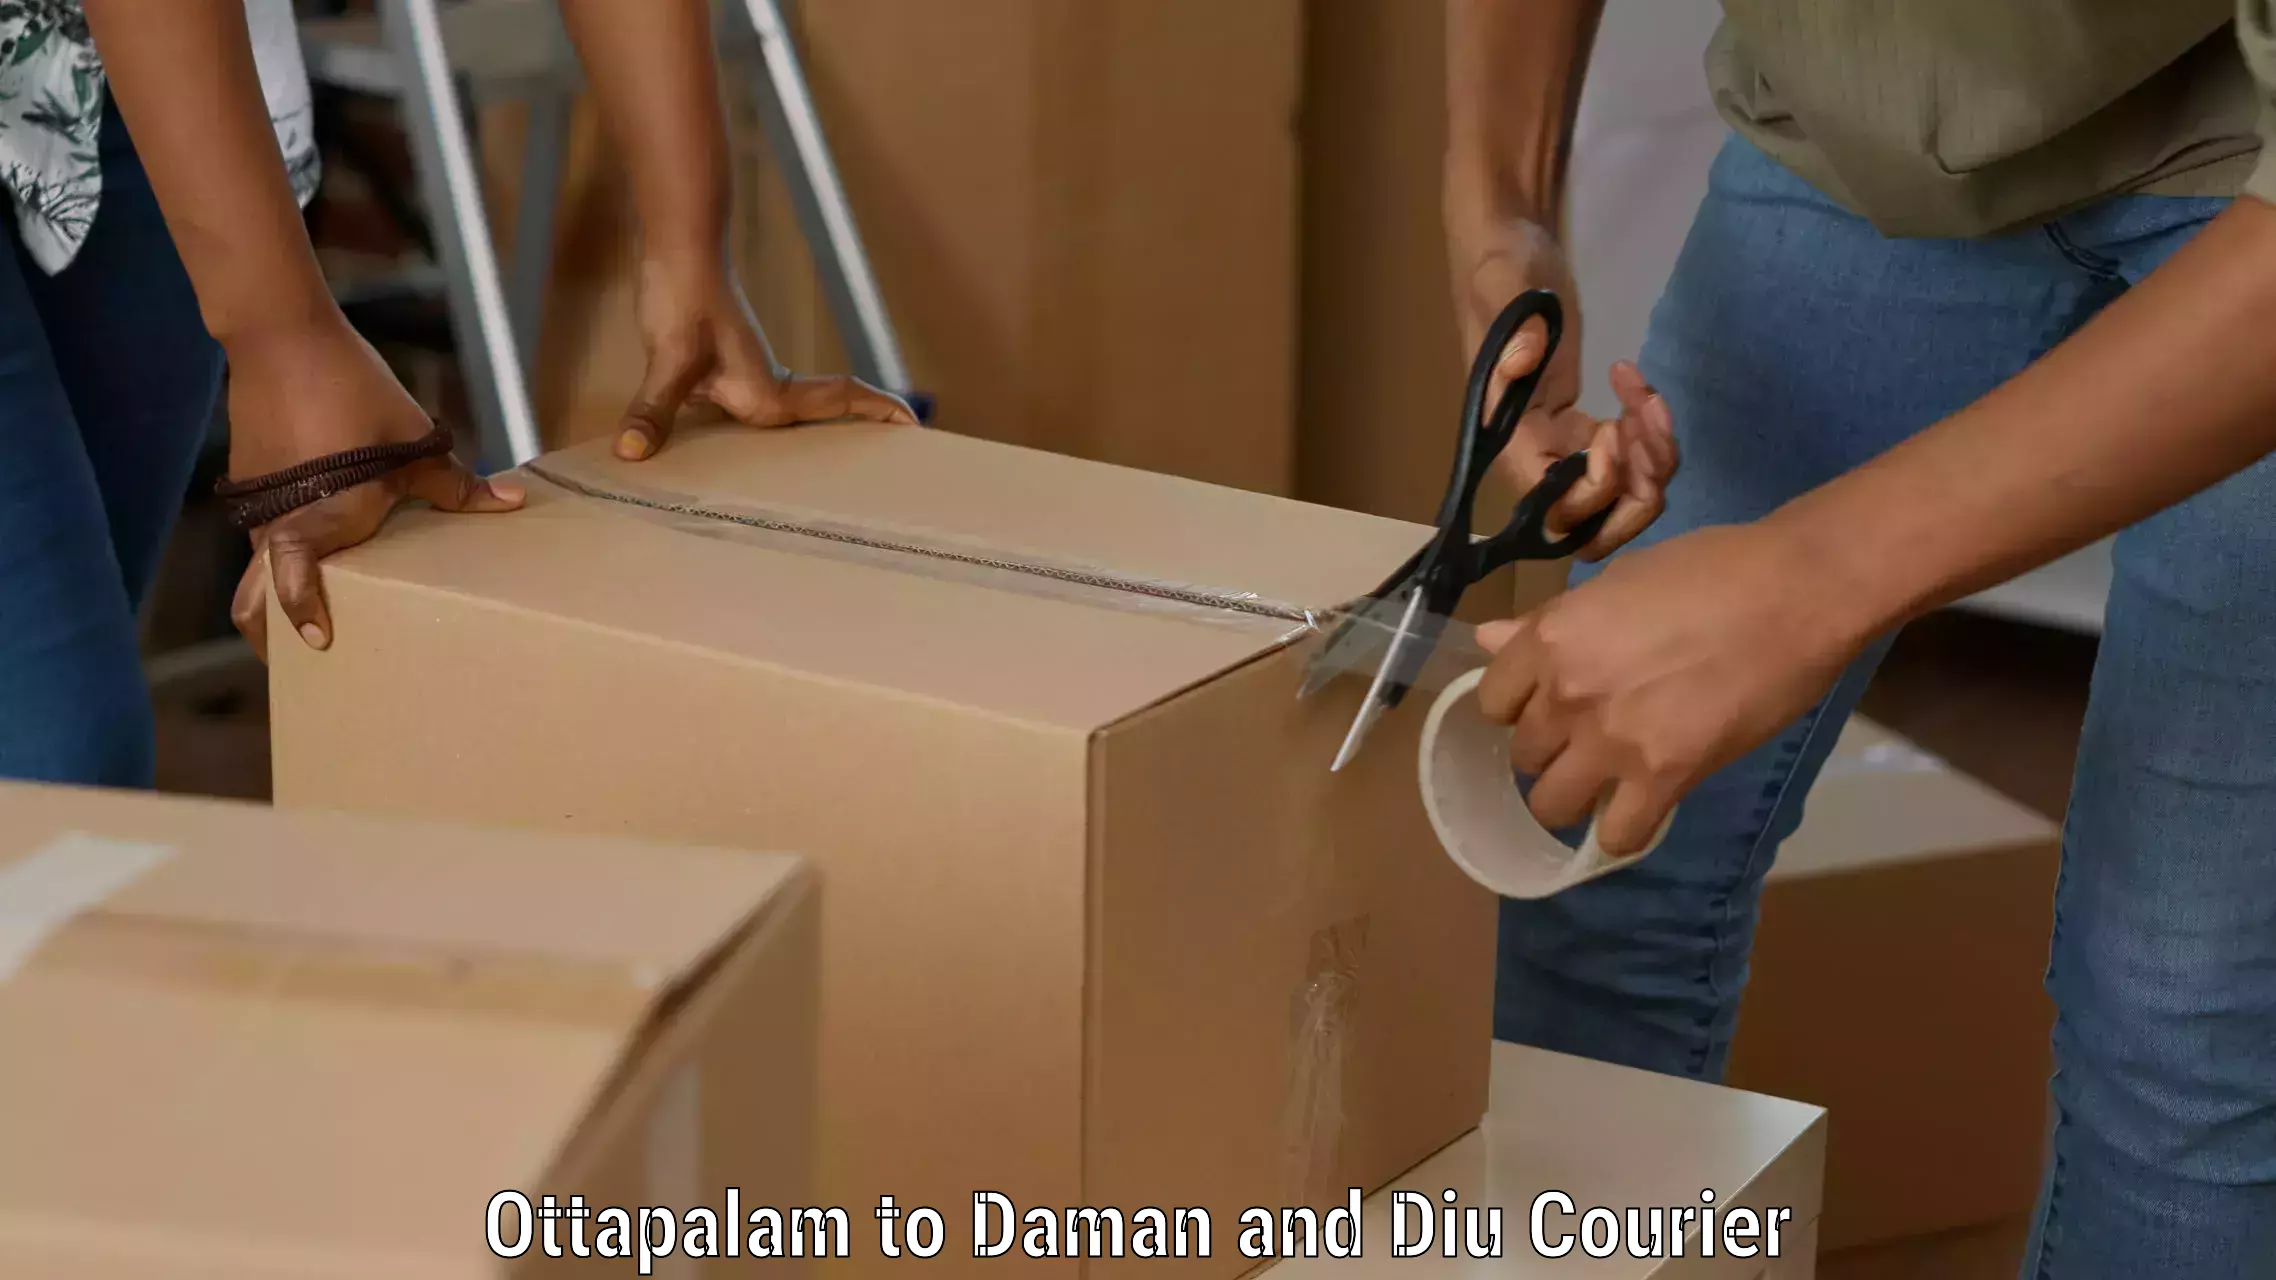 Advanced logistics management Ottapalam to Diu